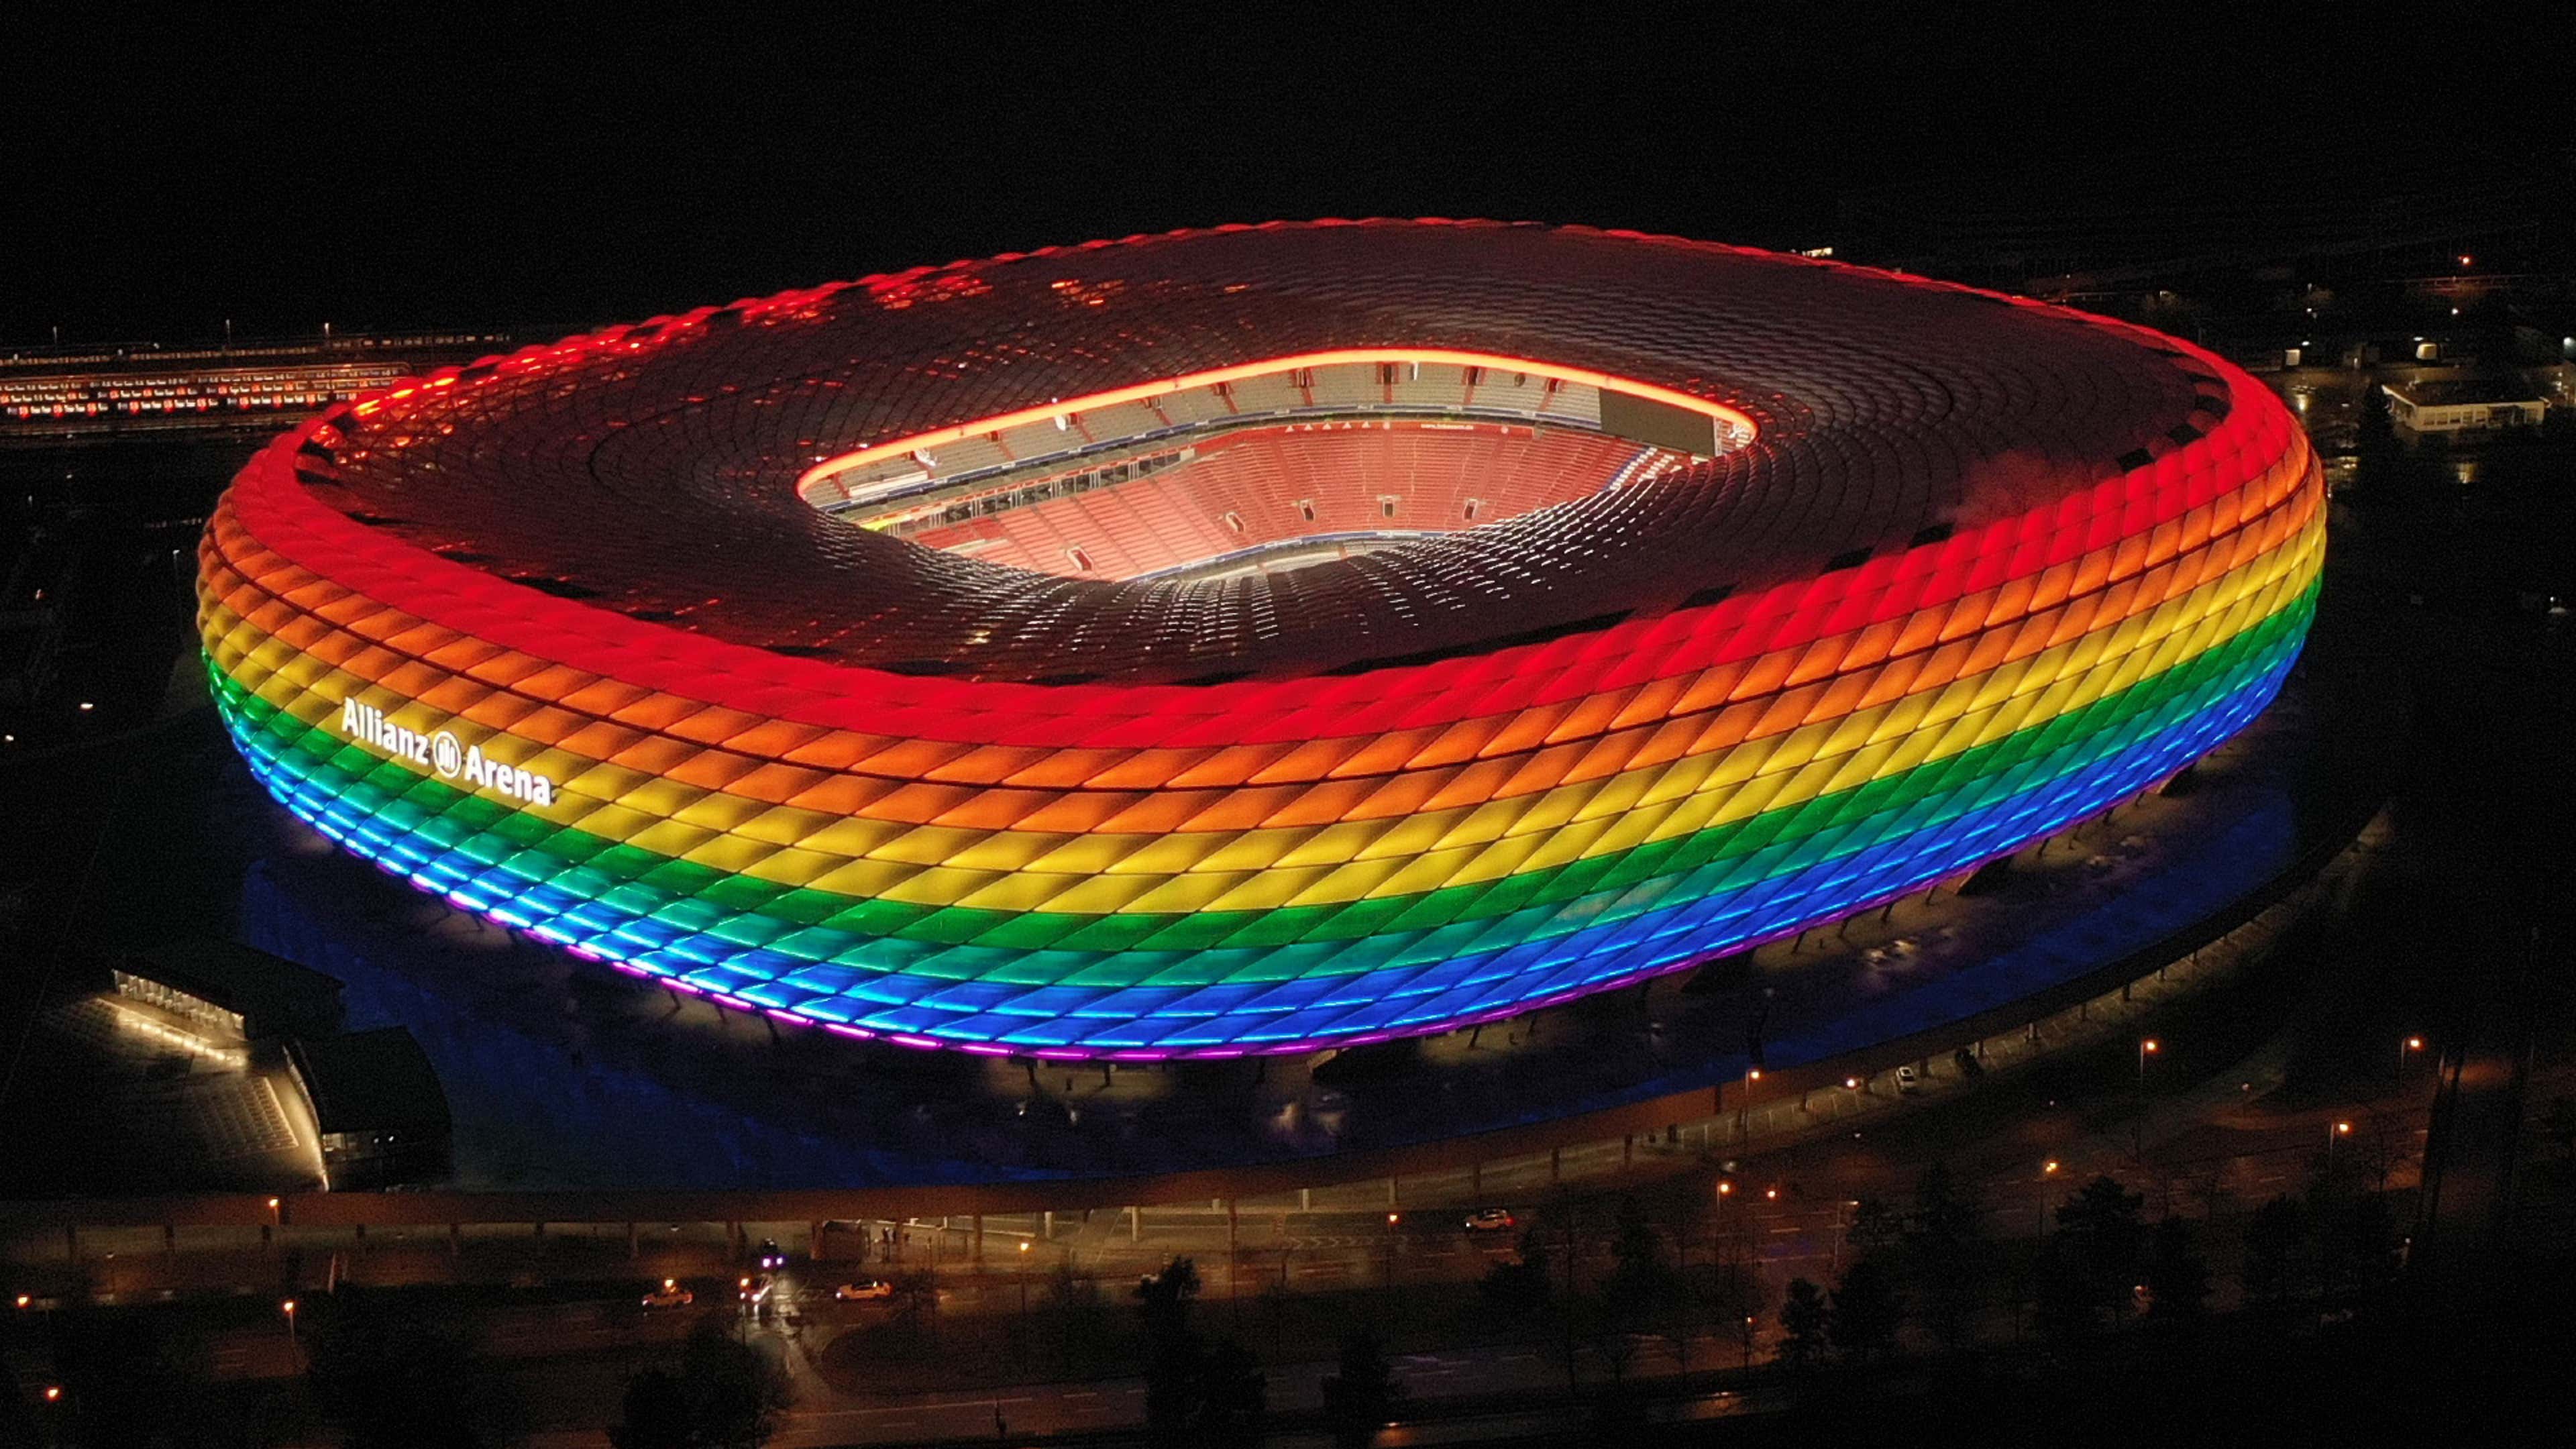 Uefa Blocks Germany From Illuminating Allianz Arena With Rainbow Lighting For Hungary Euro 2020